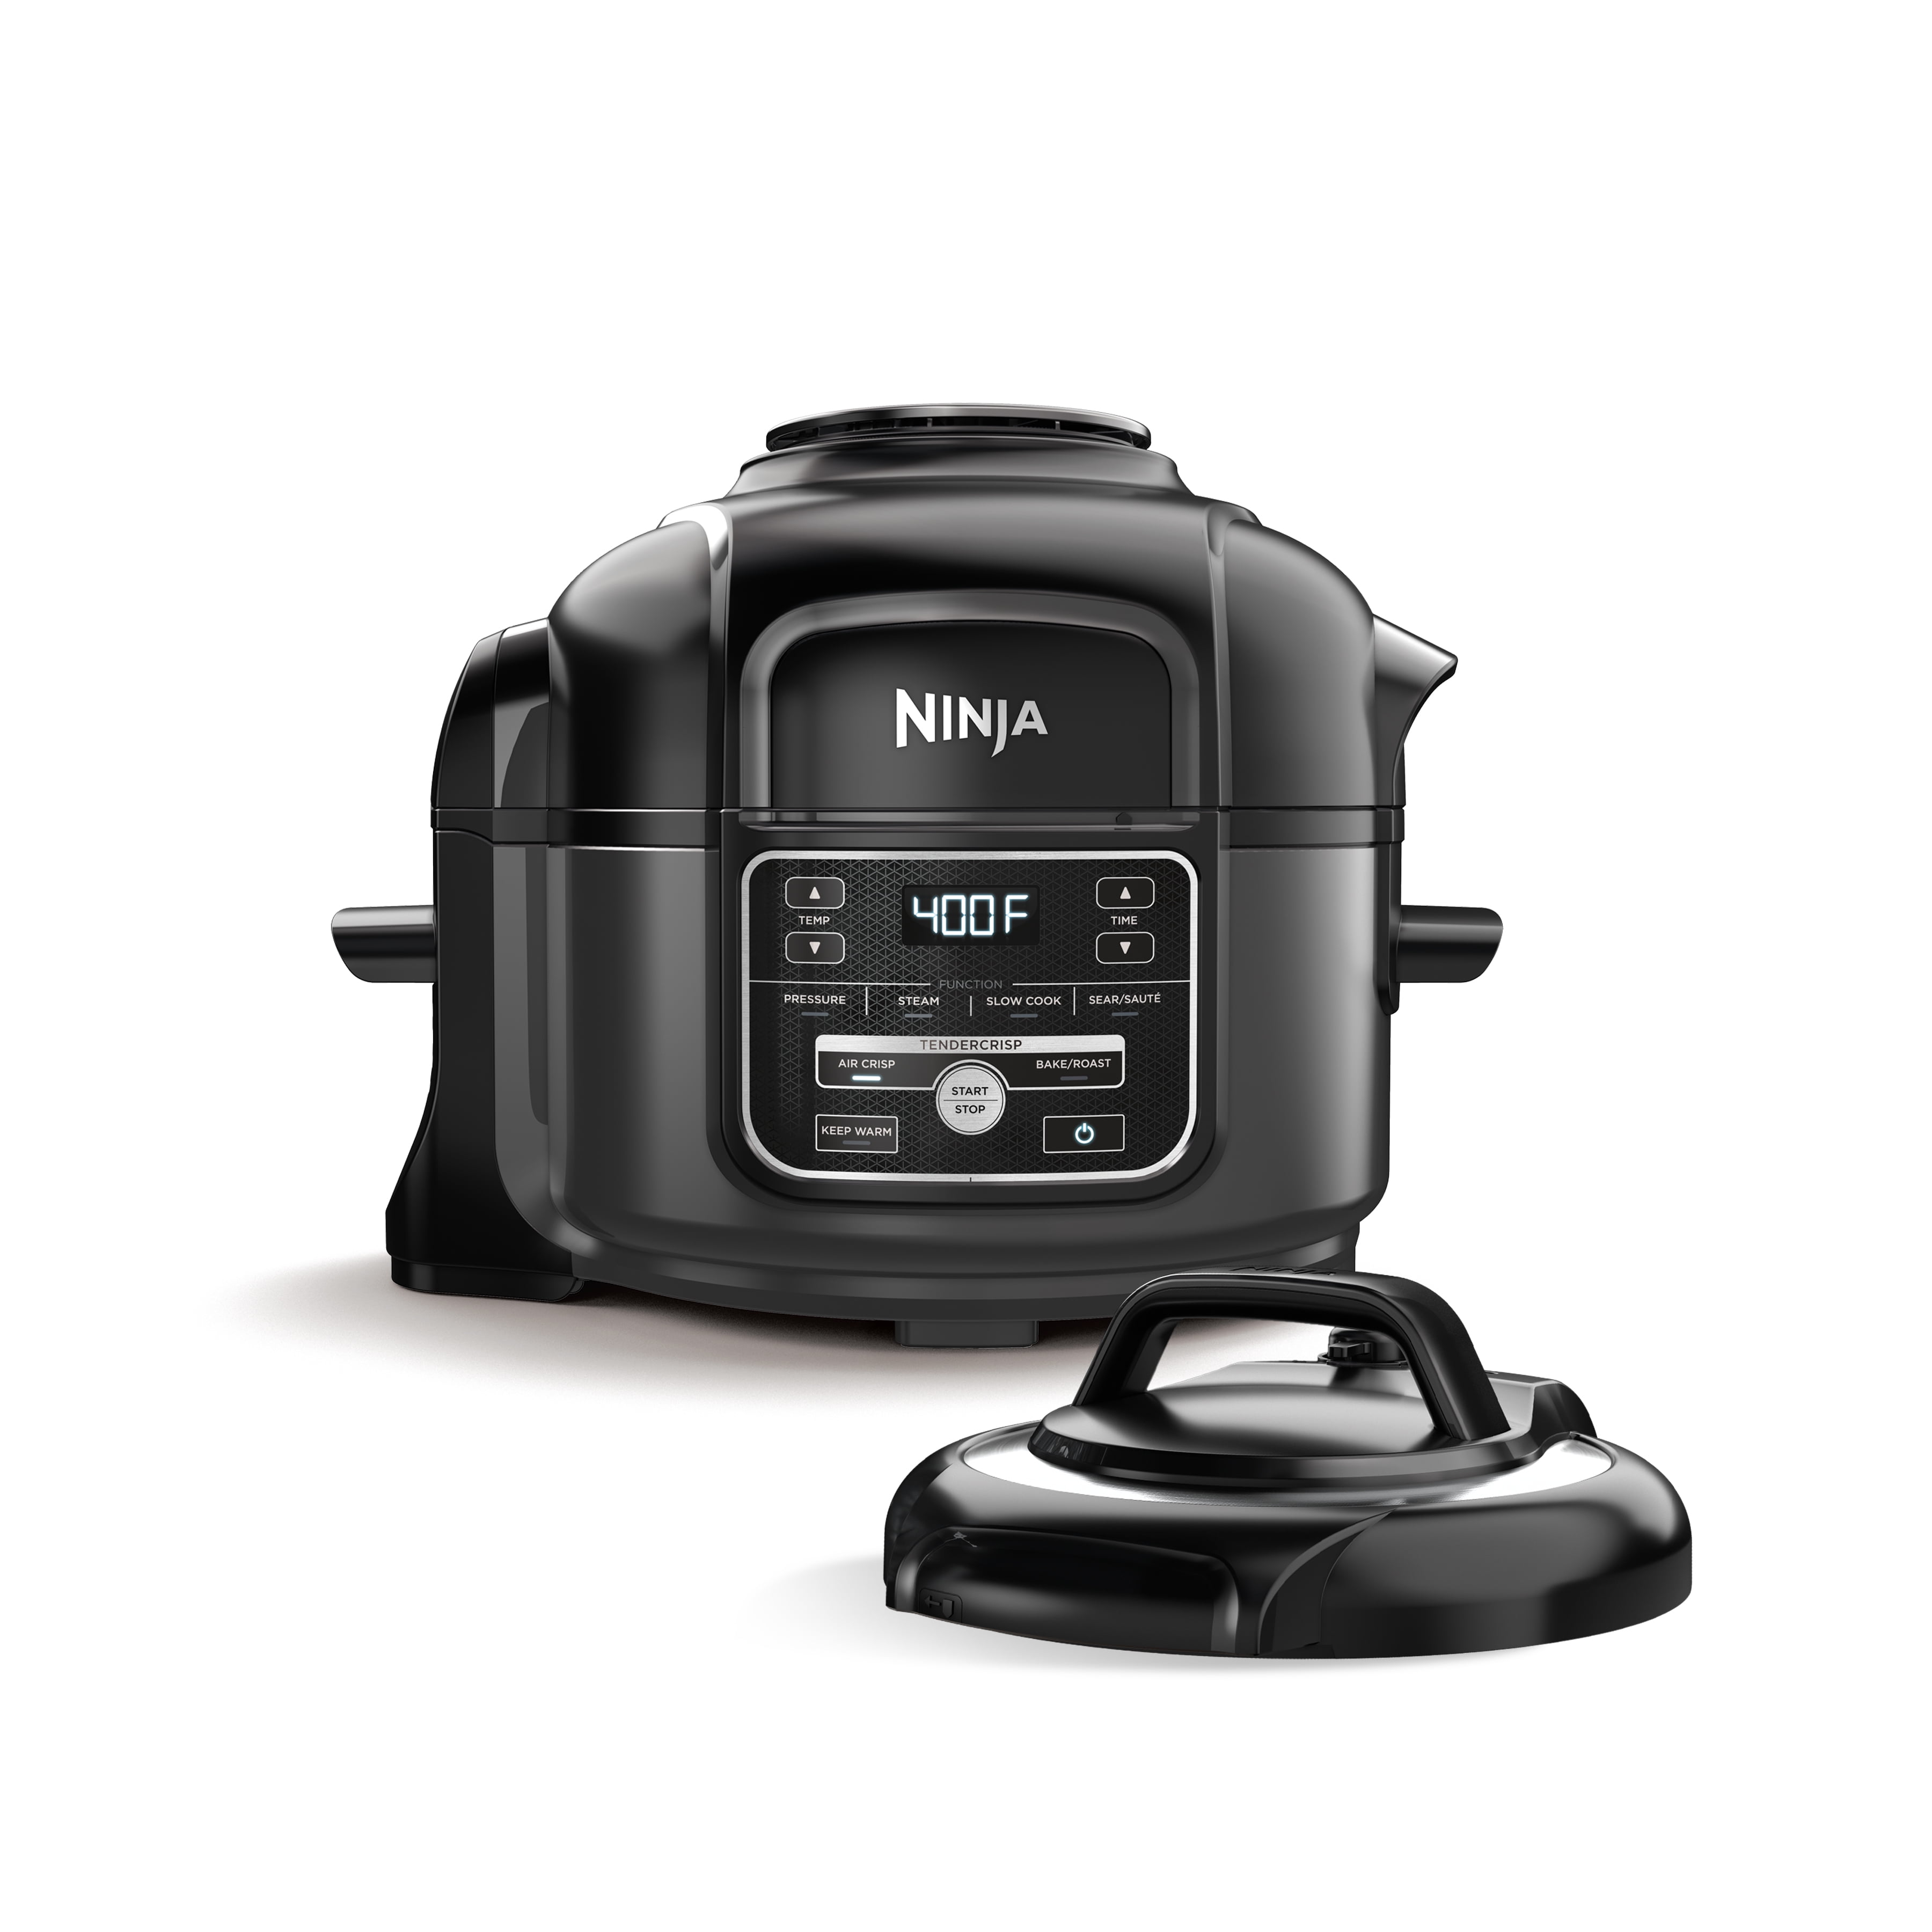 Ninja Foodi Tendercrisp 7 In 1 5 Quart Pressure Cooker Black Op101 Walmart Com Walmart Com